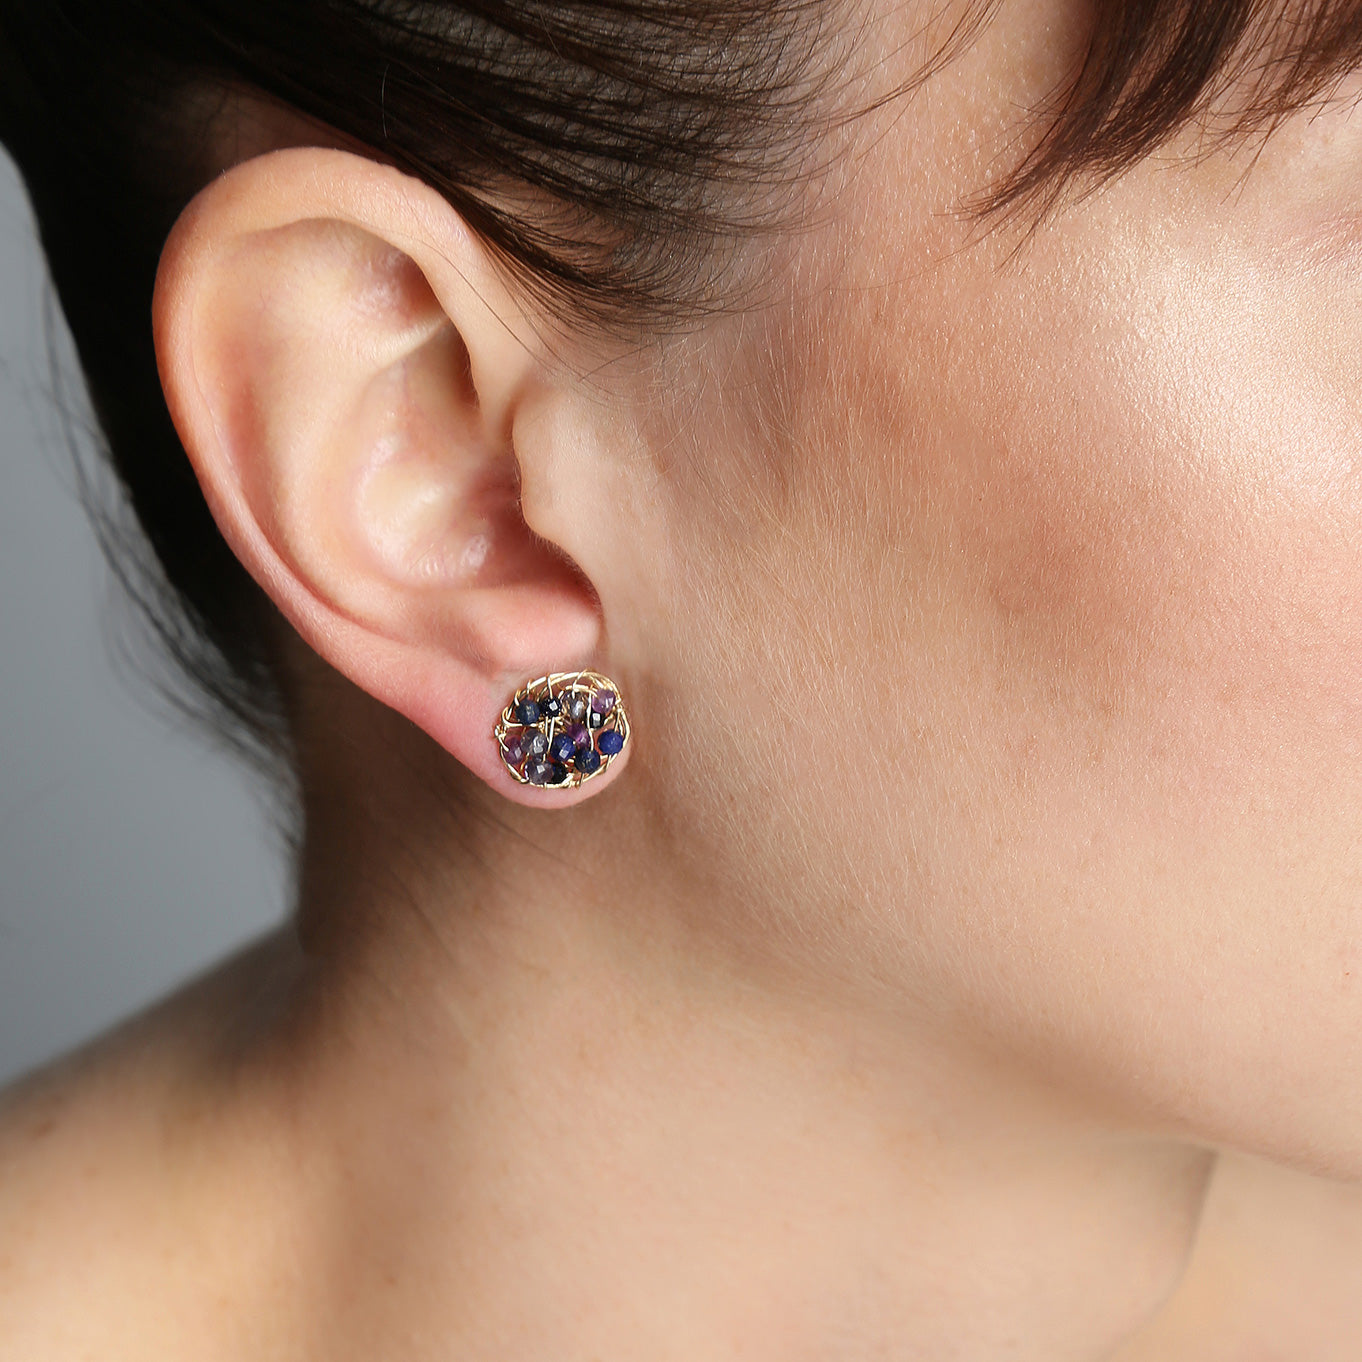 Aura Stud Earrings #1 (10mm) - Blue Mix Gems Earrings TARBAY   